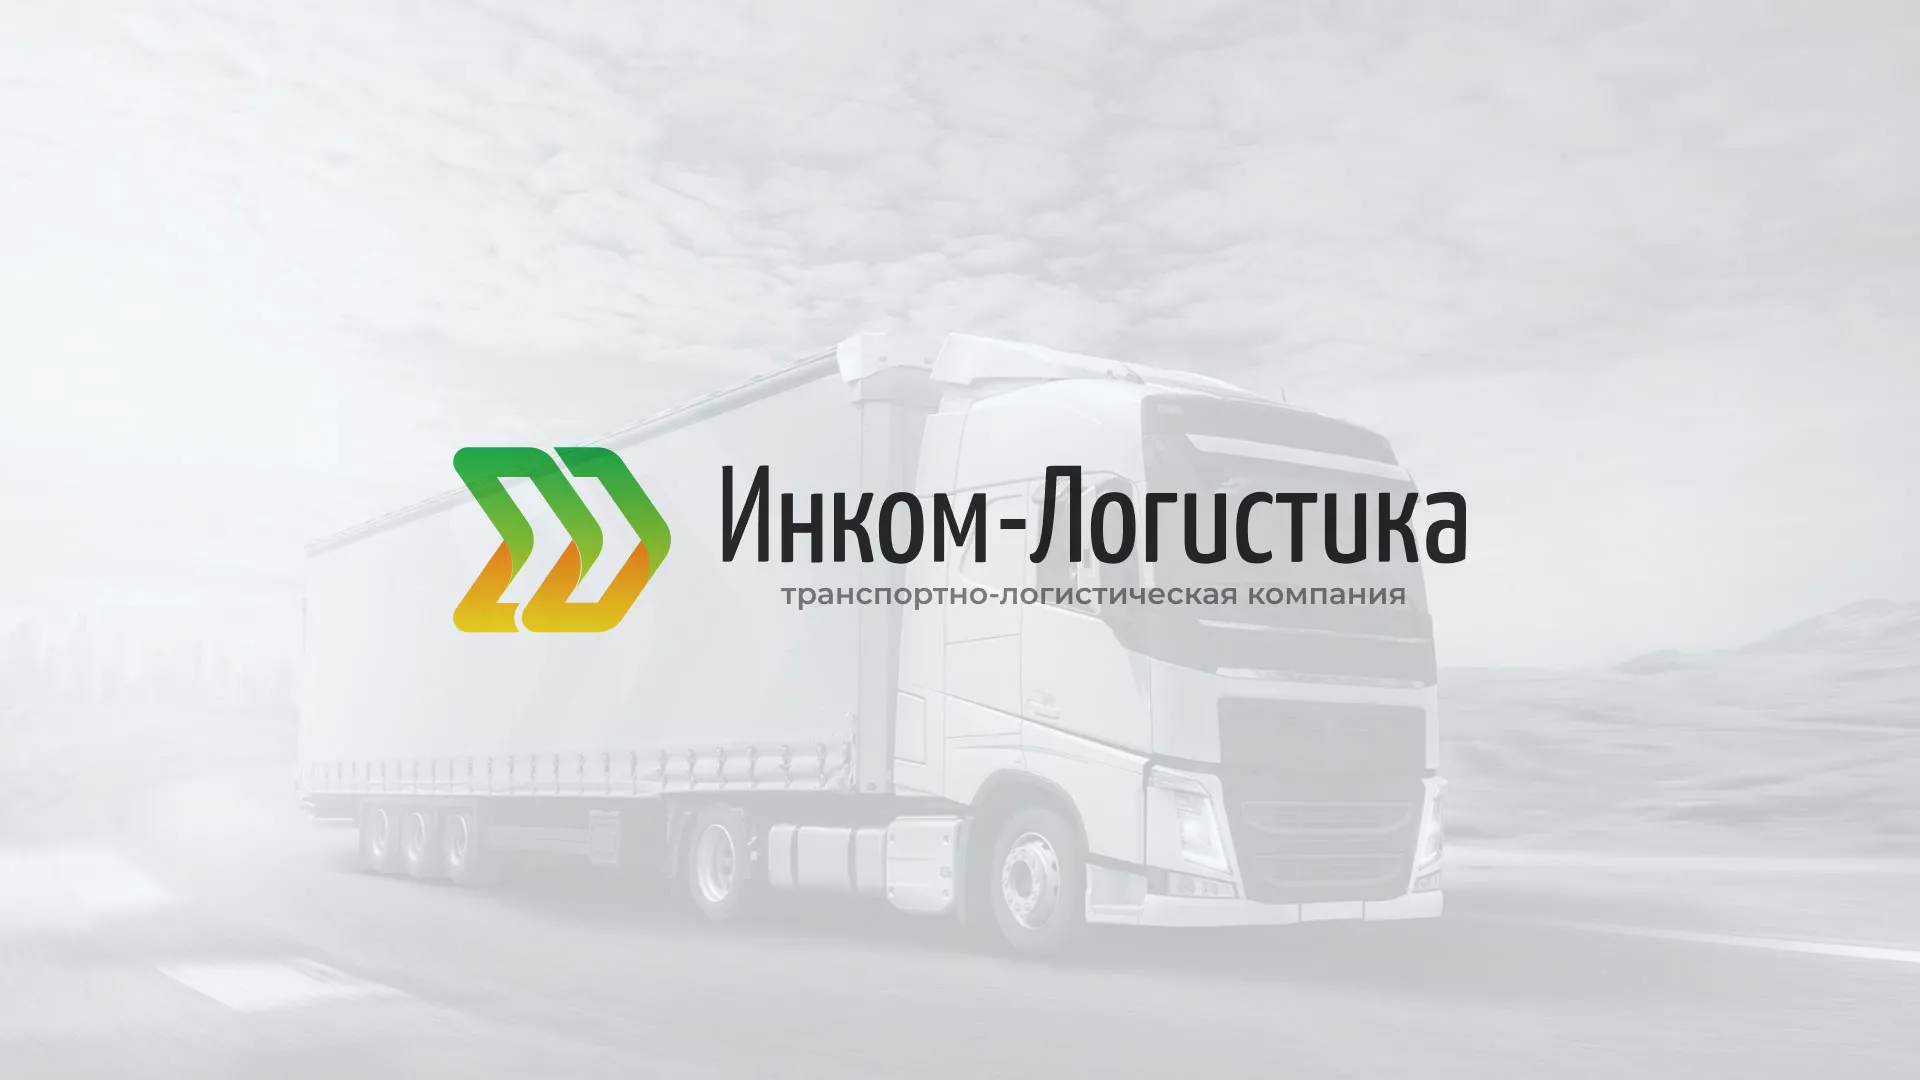 Разработка логотипа и сайта компании «Инком-Логистика» в Николаевске-на-Амуре